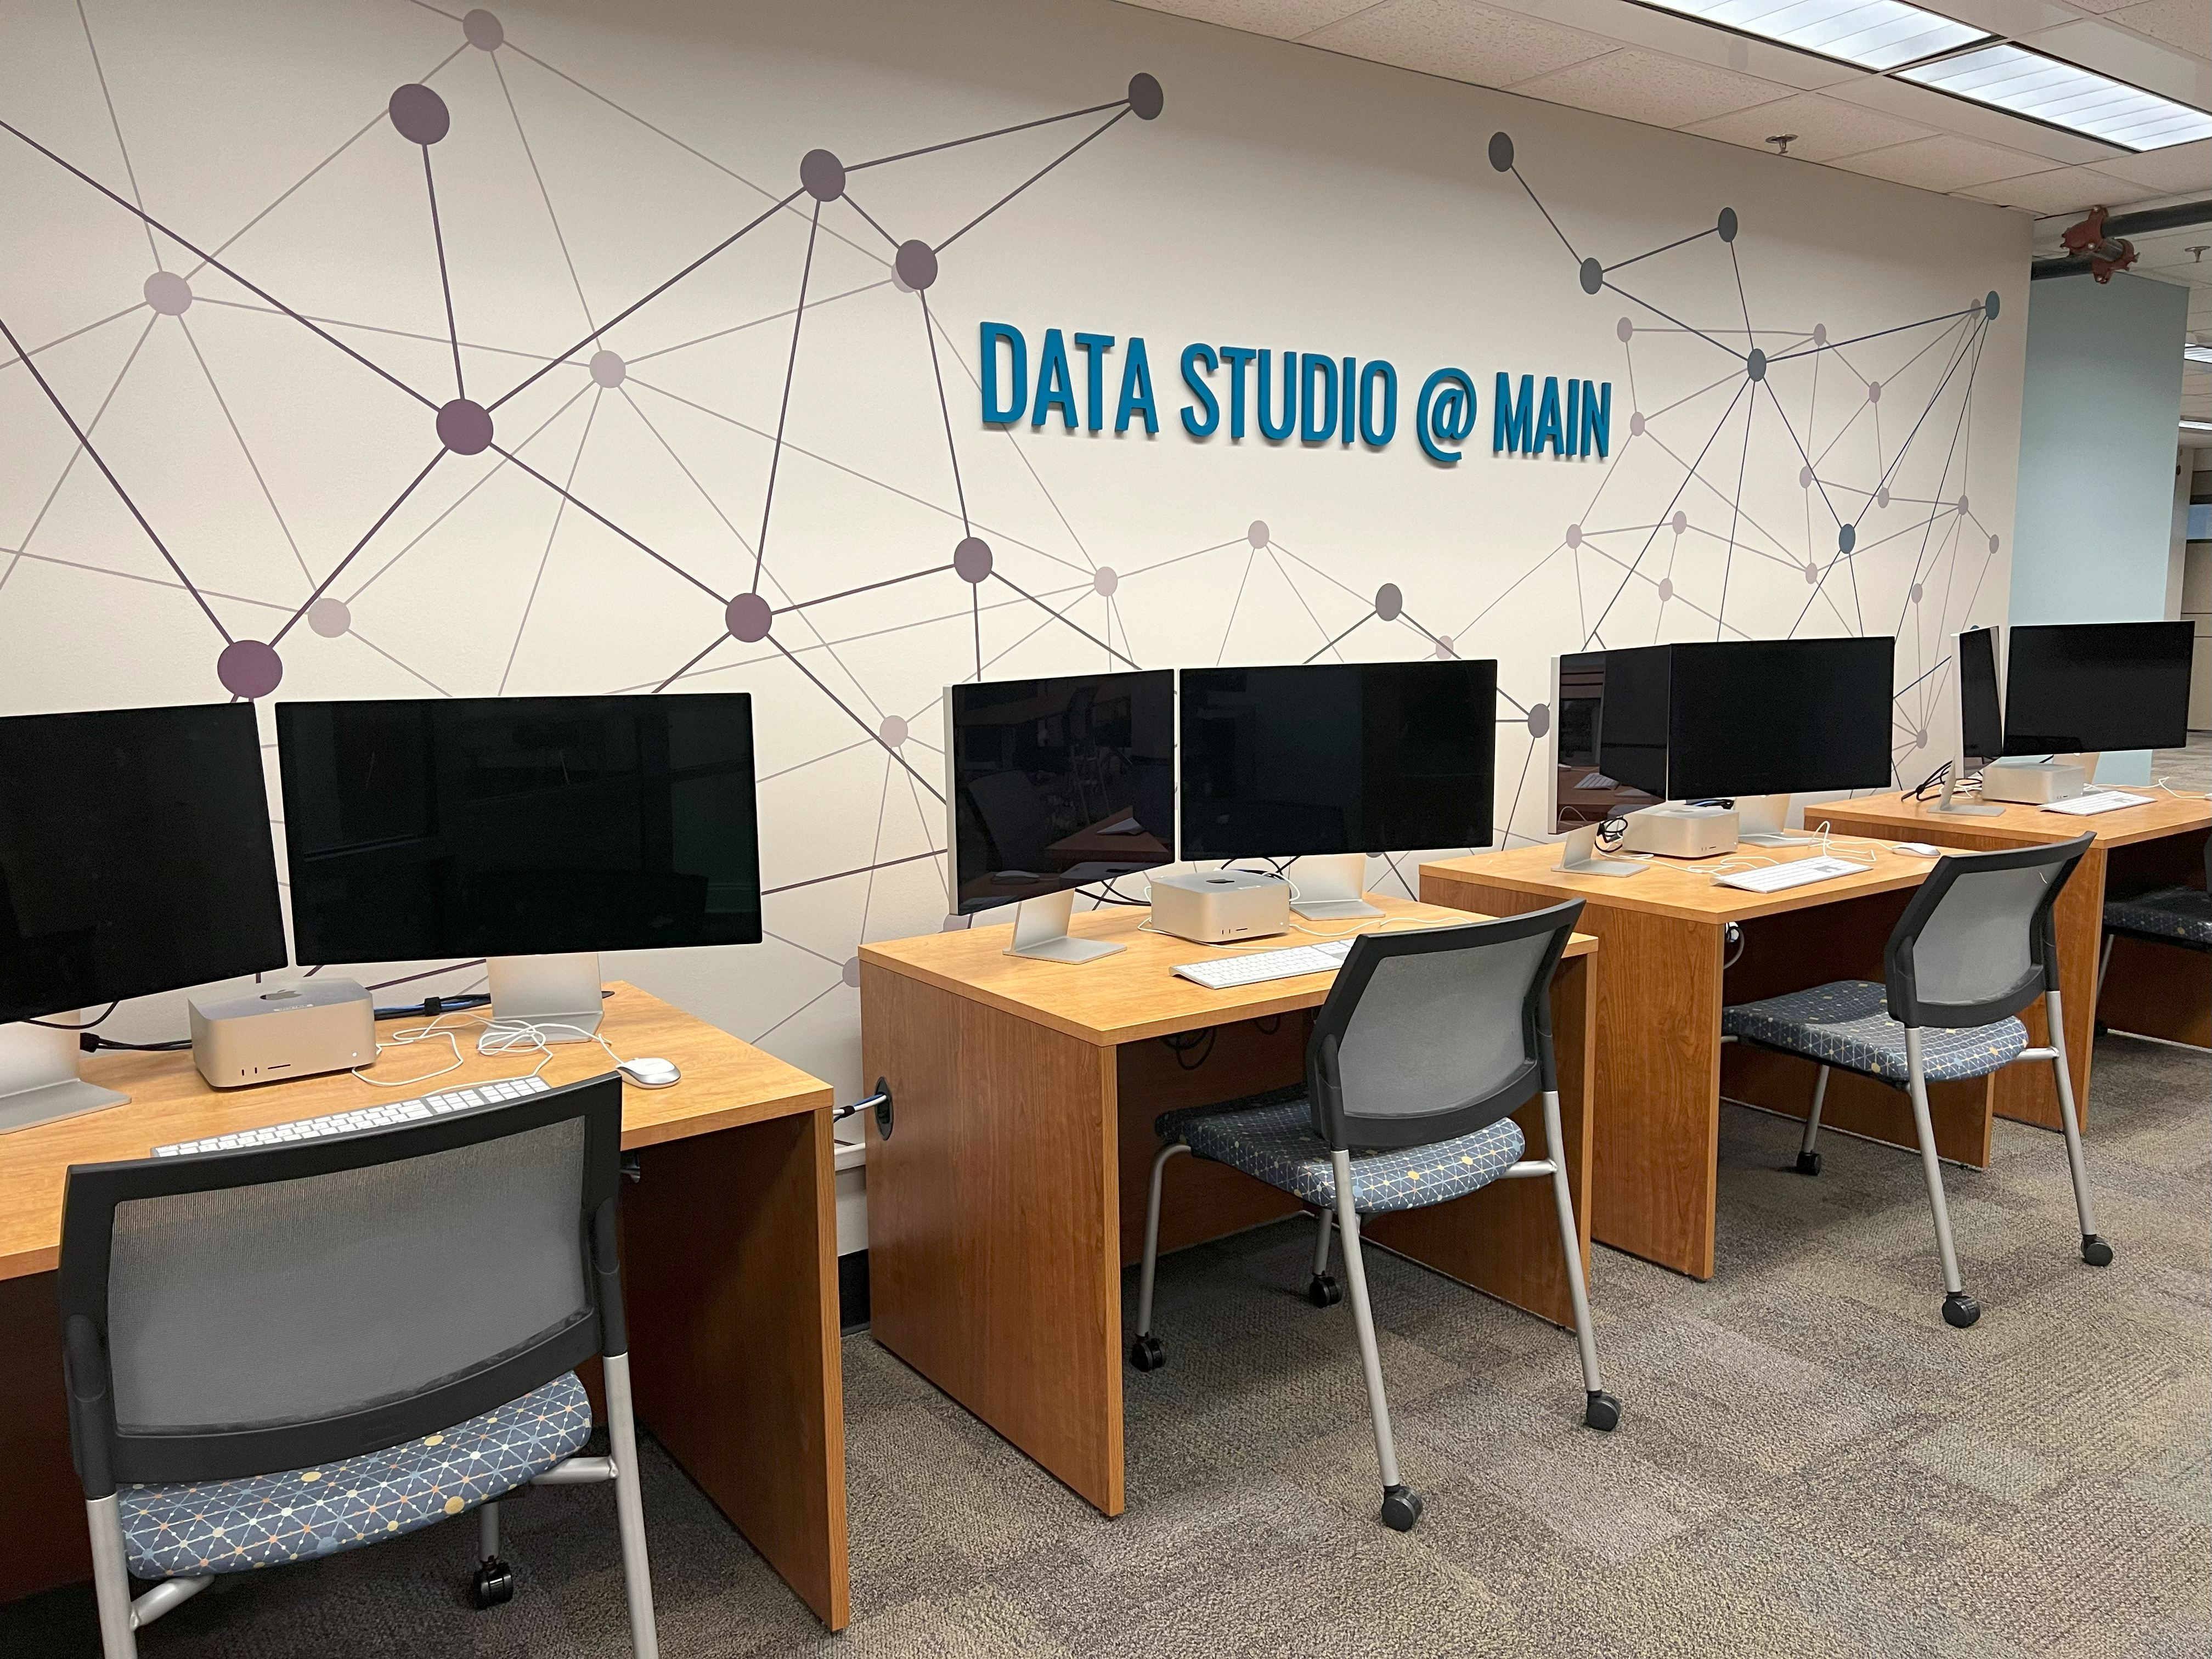 image of Data Studio @ Main computers